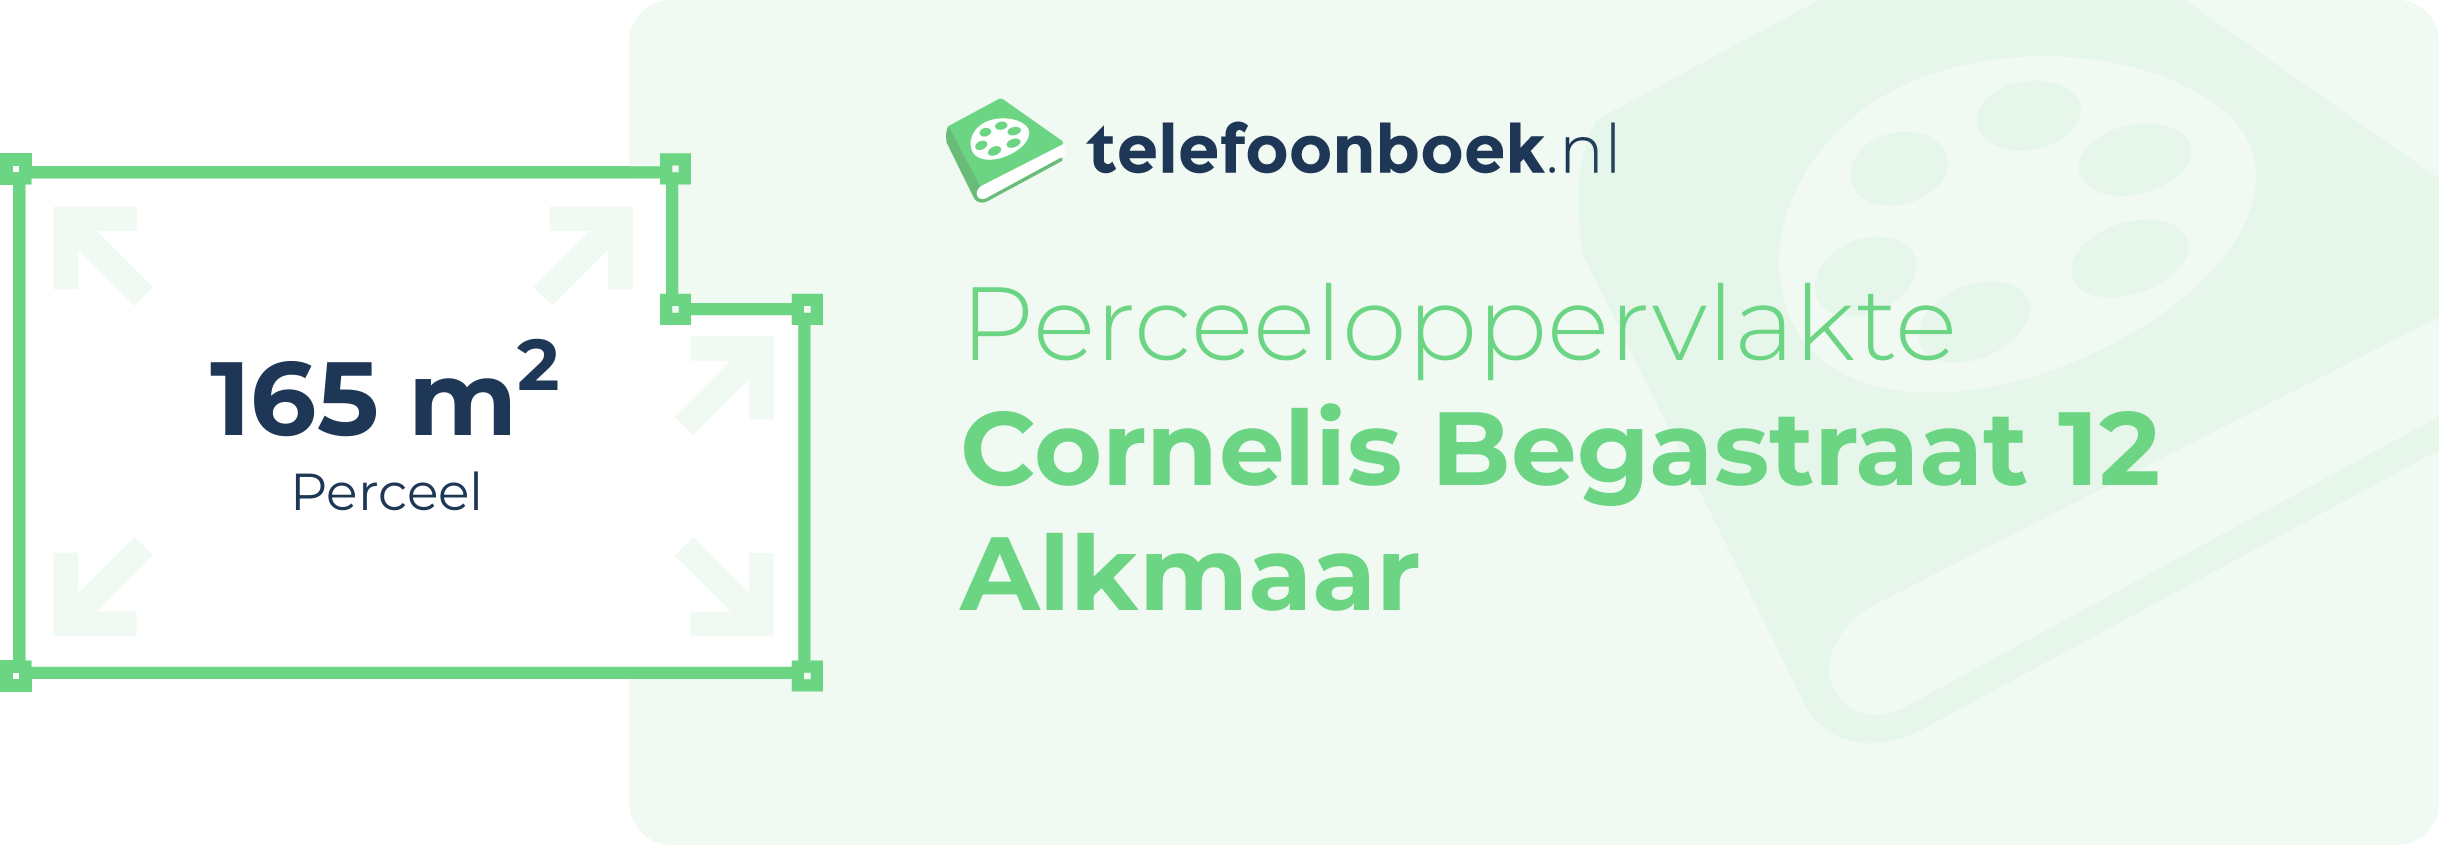 Perceeloppervlakte Cornelis Begastraat 12 Alkmaar